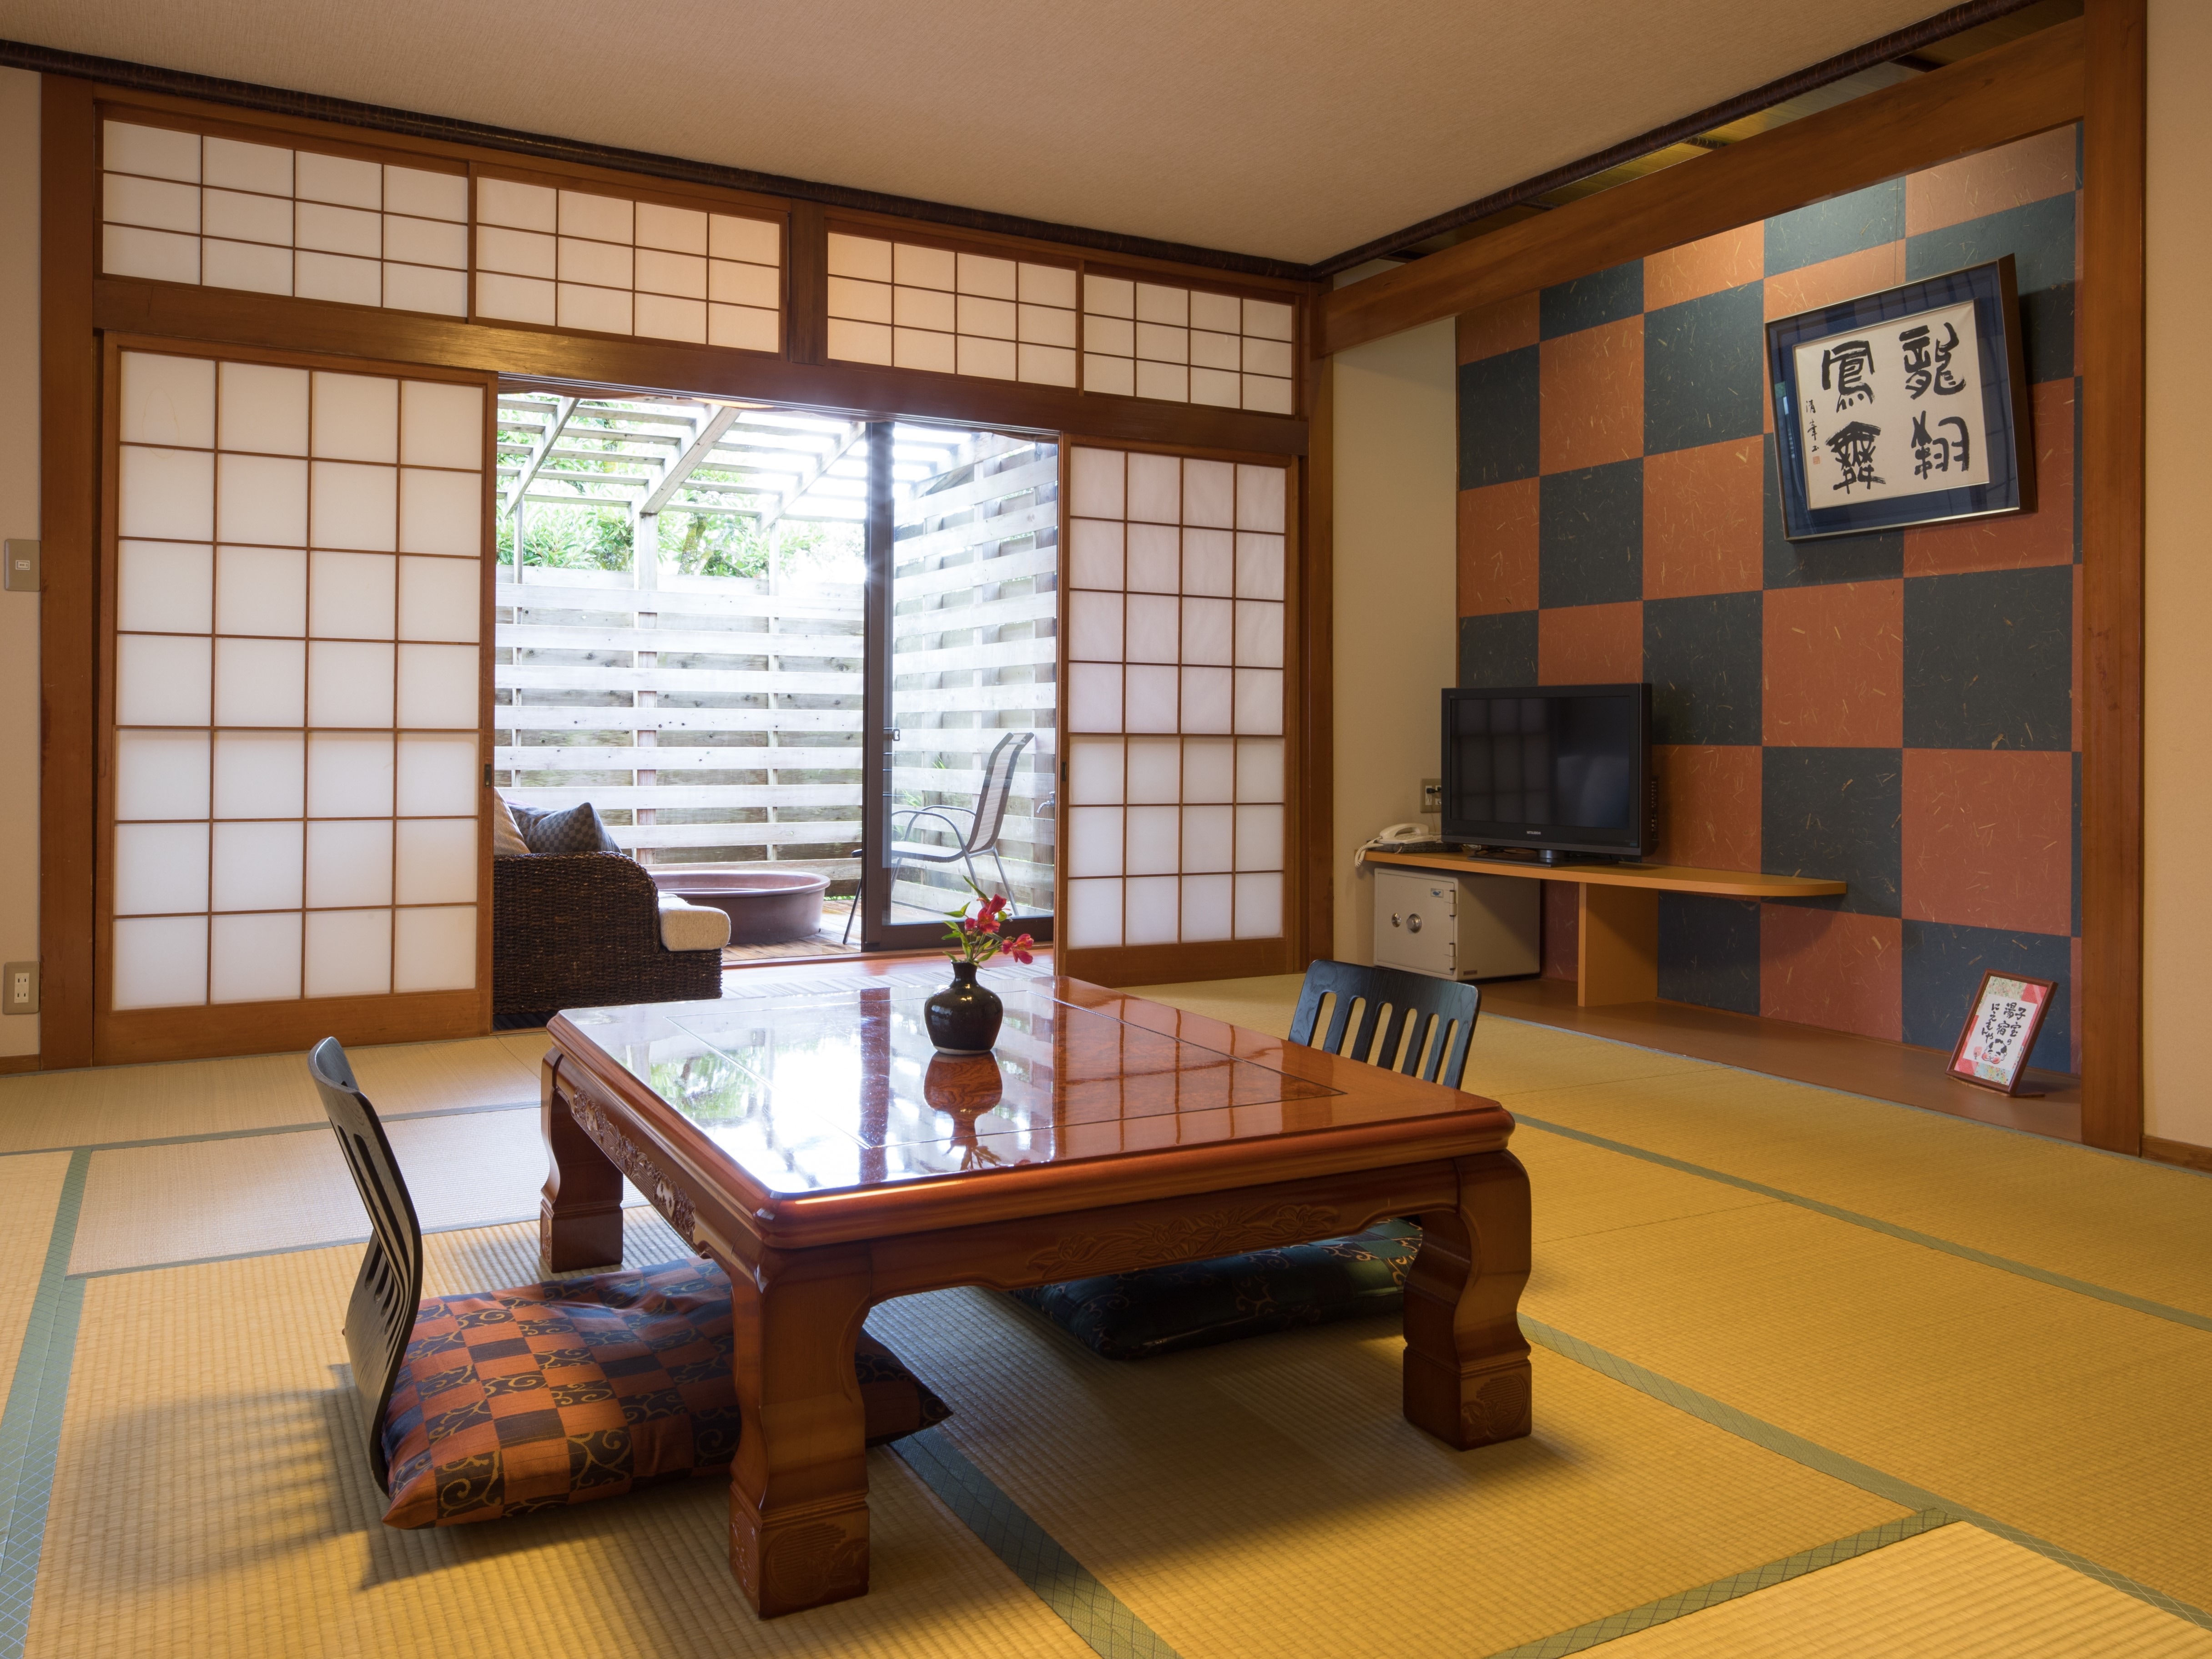 15 tatami mats with open-air bath